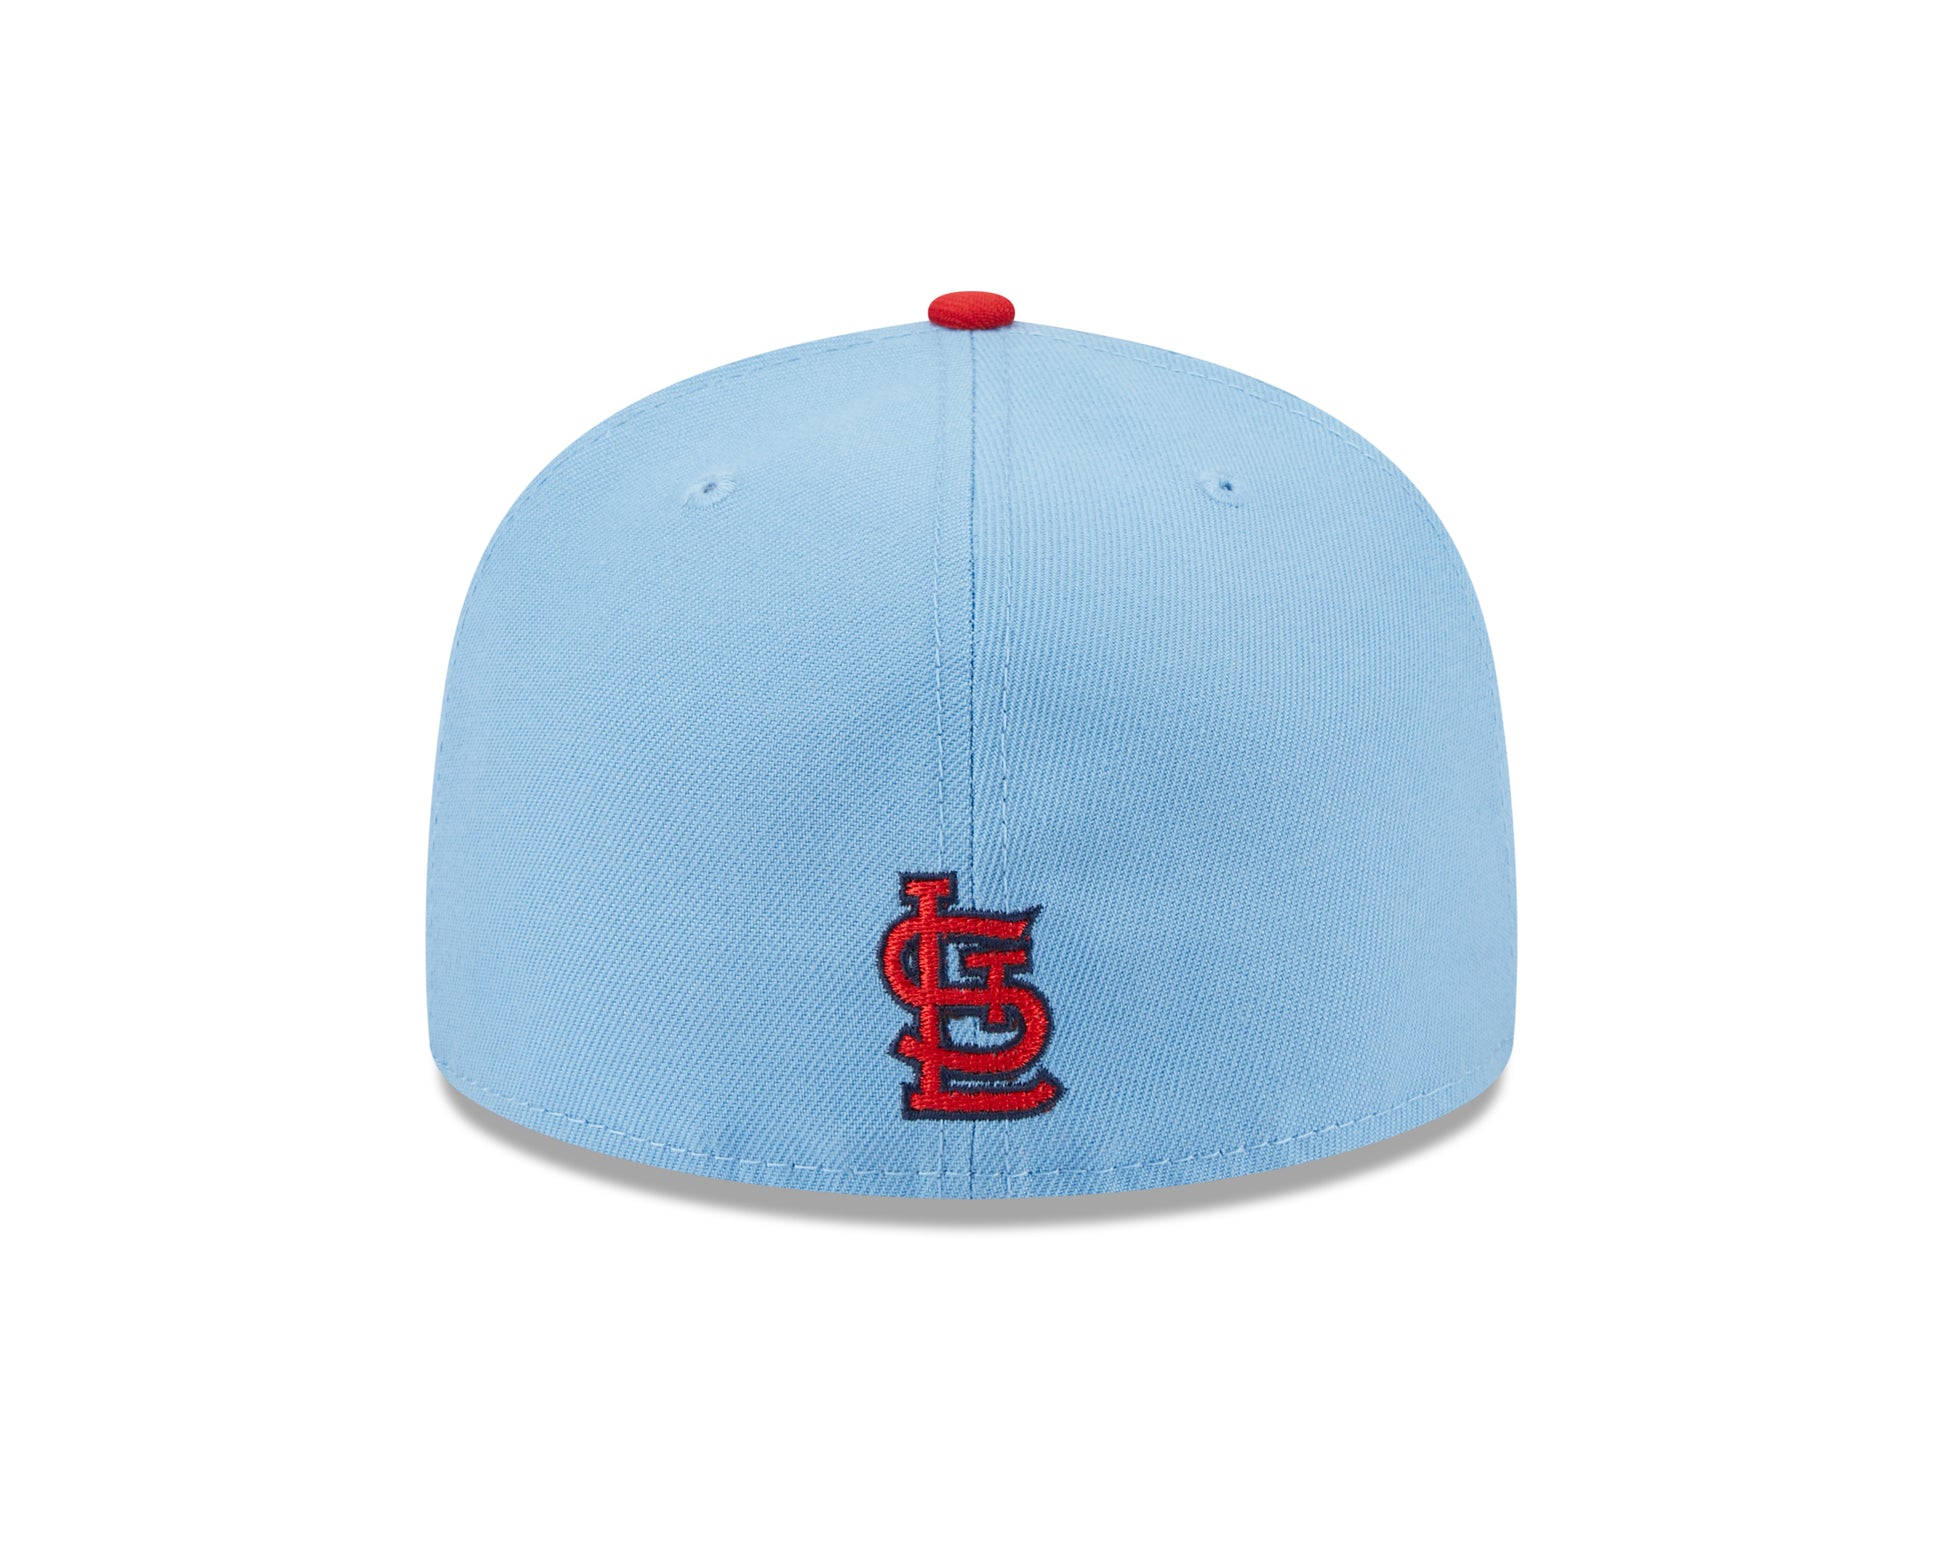 New Era - St. Louis Cardinals - 59Fifty Fitted - Powder Blues - Sky Blue - Headz Up 